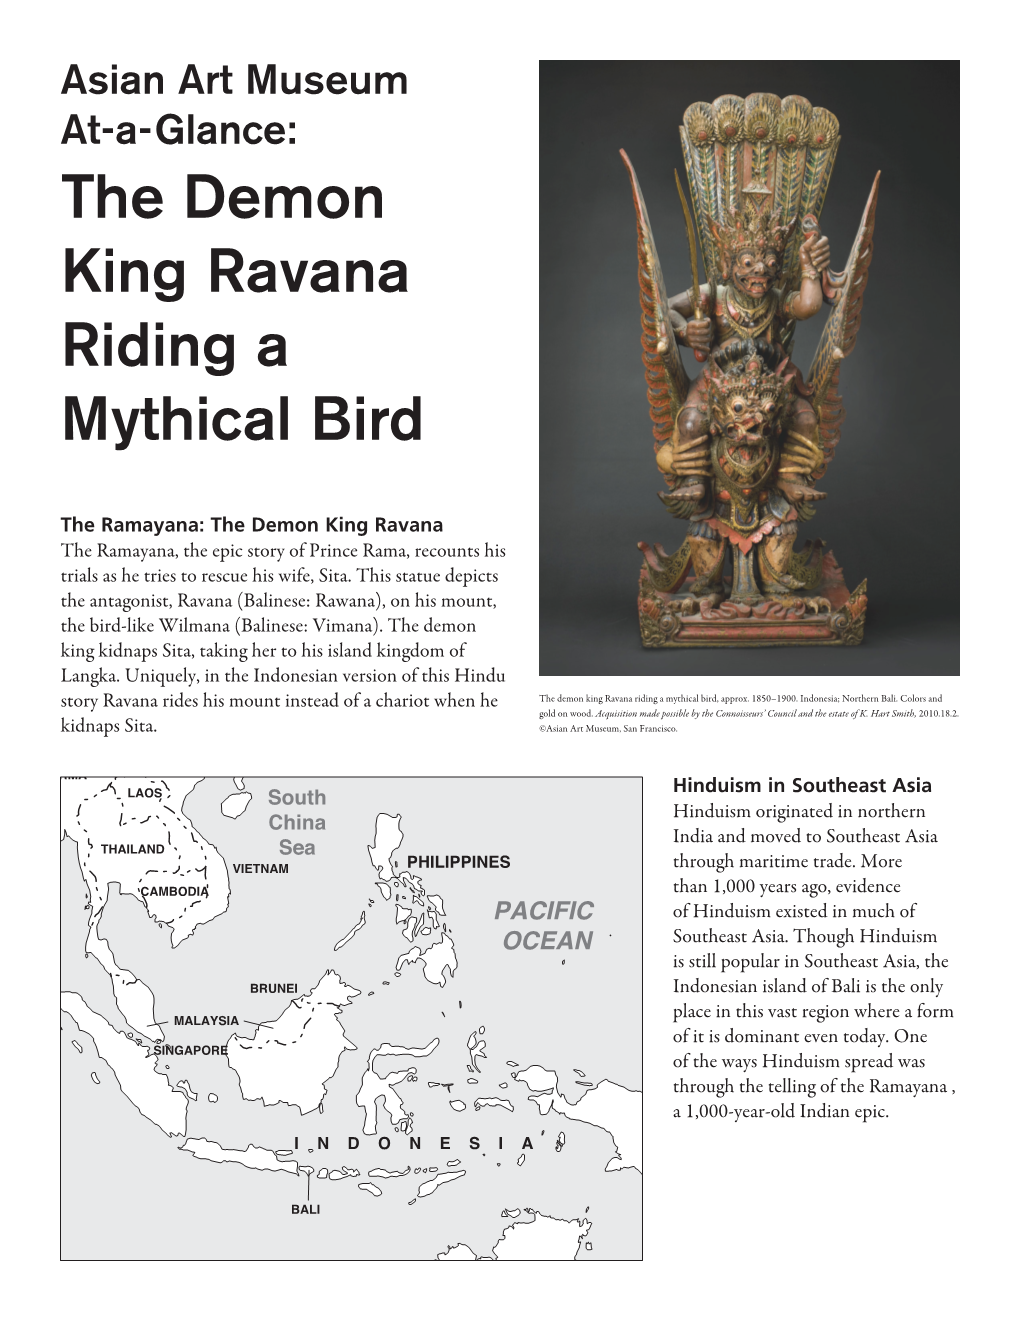 The Demon King Ravana Riding a Mythical Bird, Approx